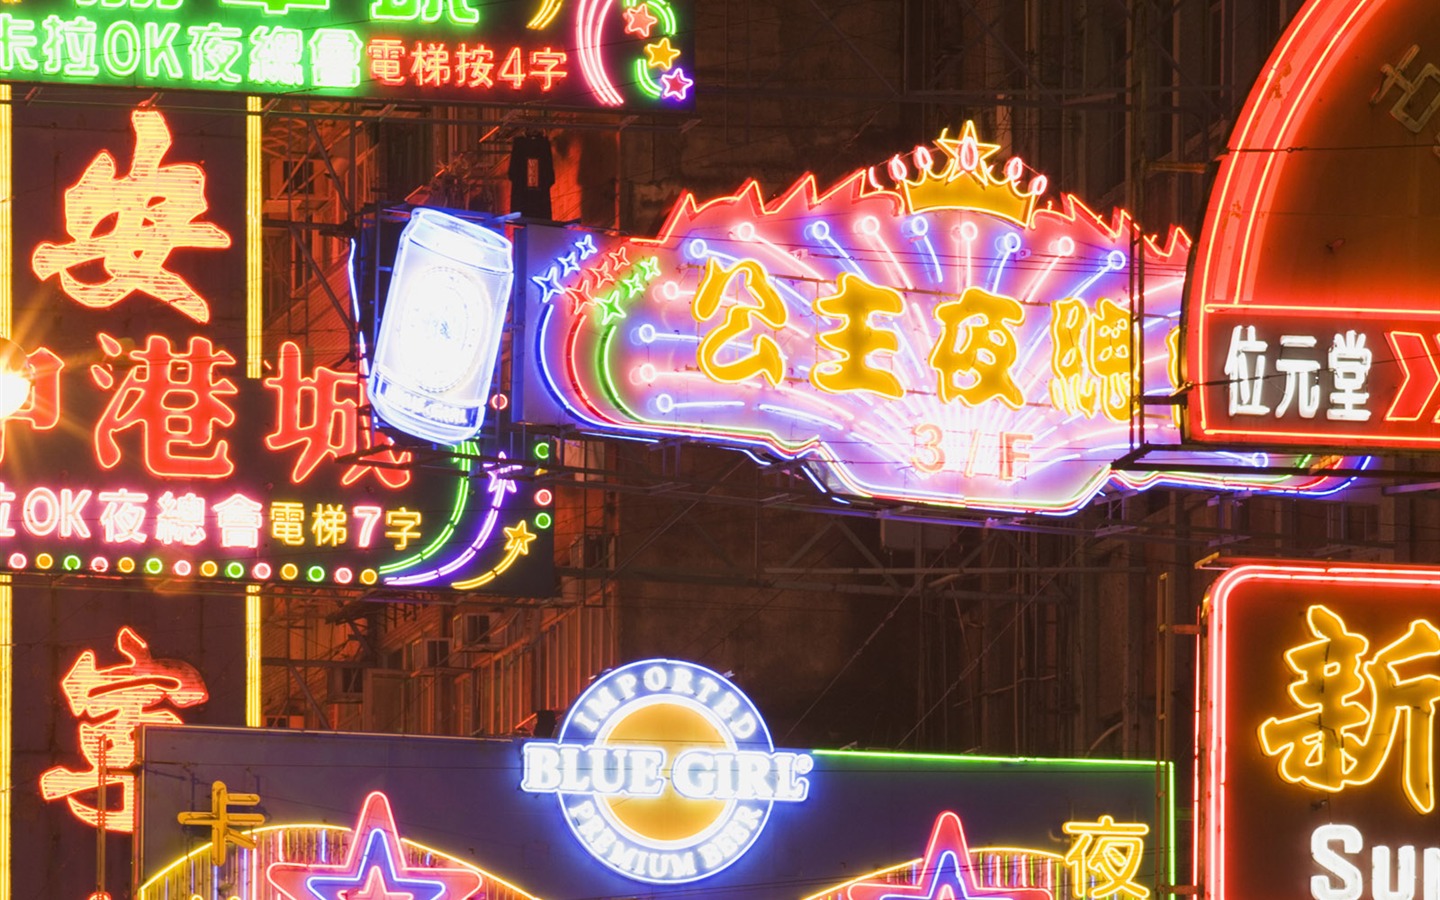 Vistazo de fondos de pantalla urbanas de China #10 - 1440x900